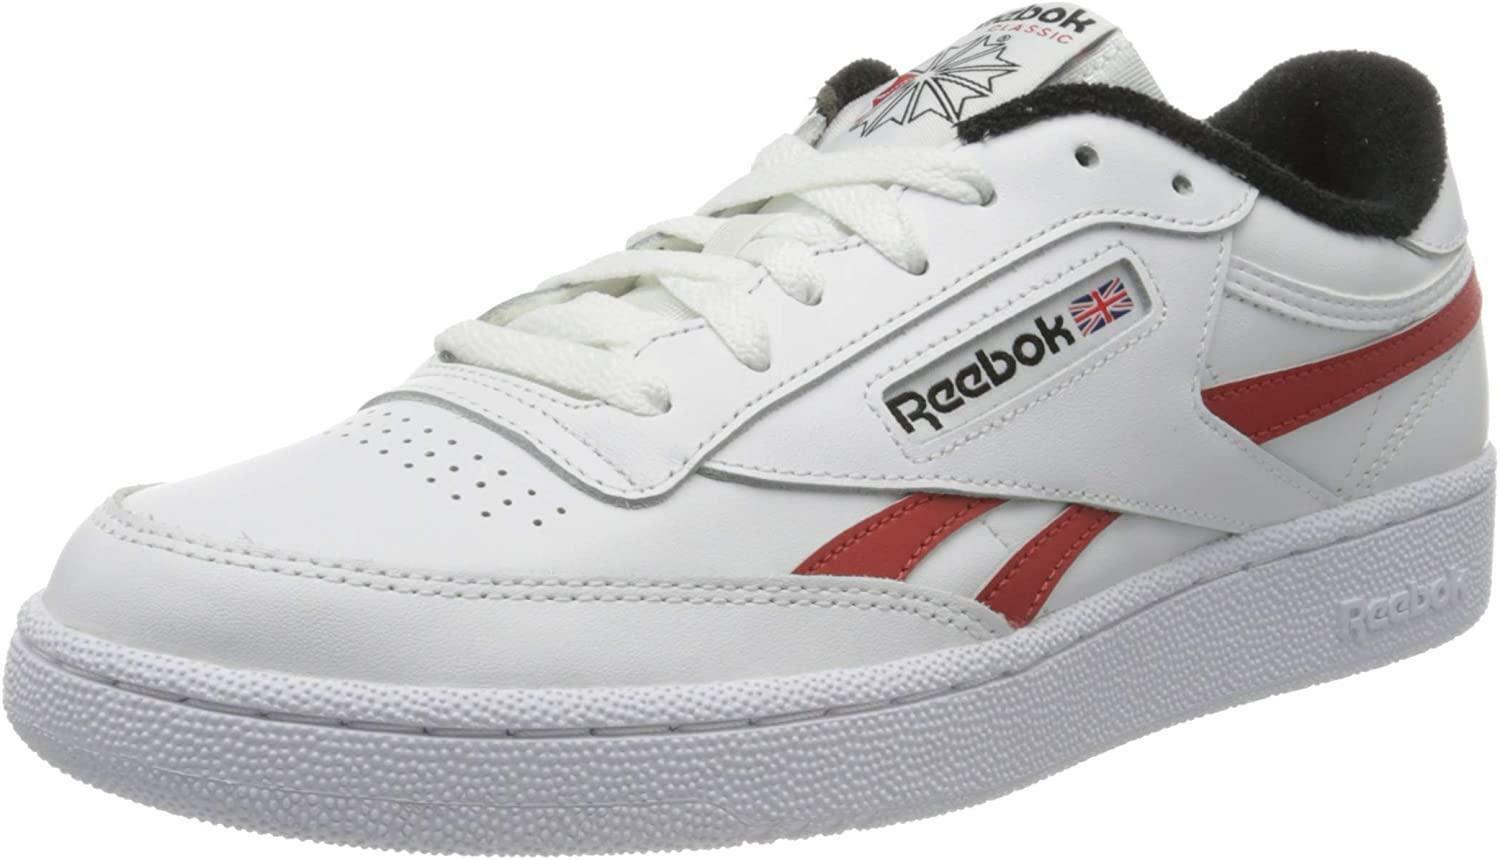 Reebok club revenge scarpe sportive uomo bianche ef3220